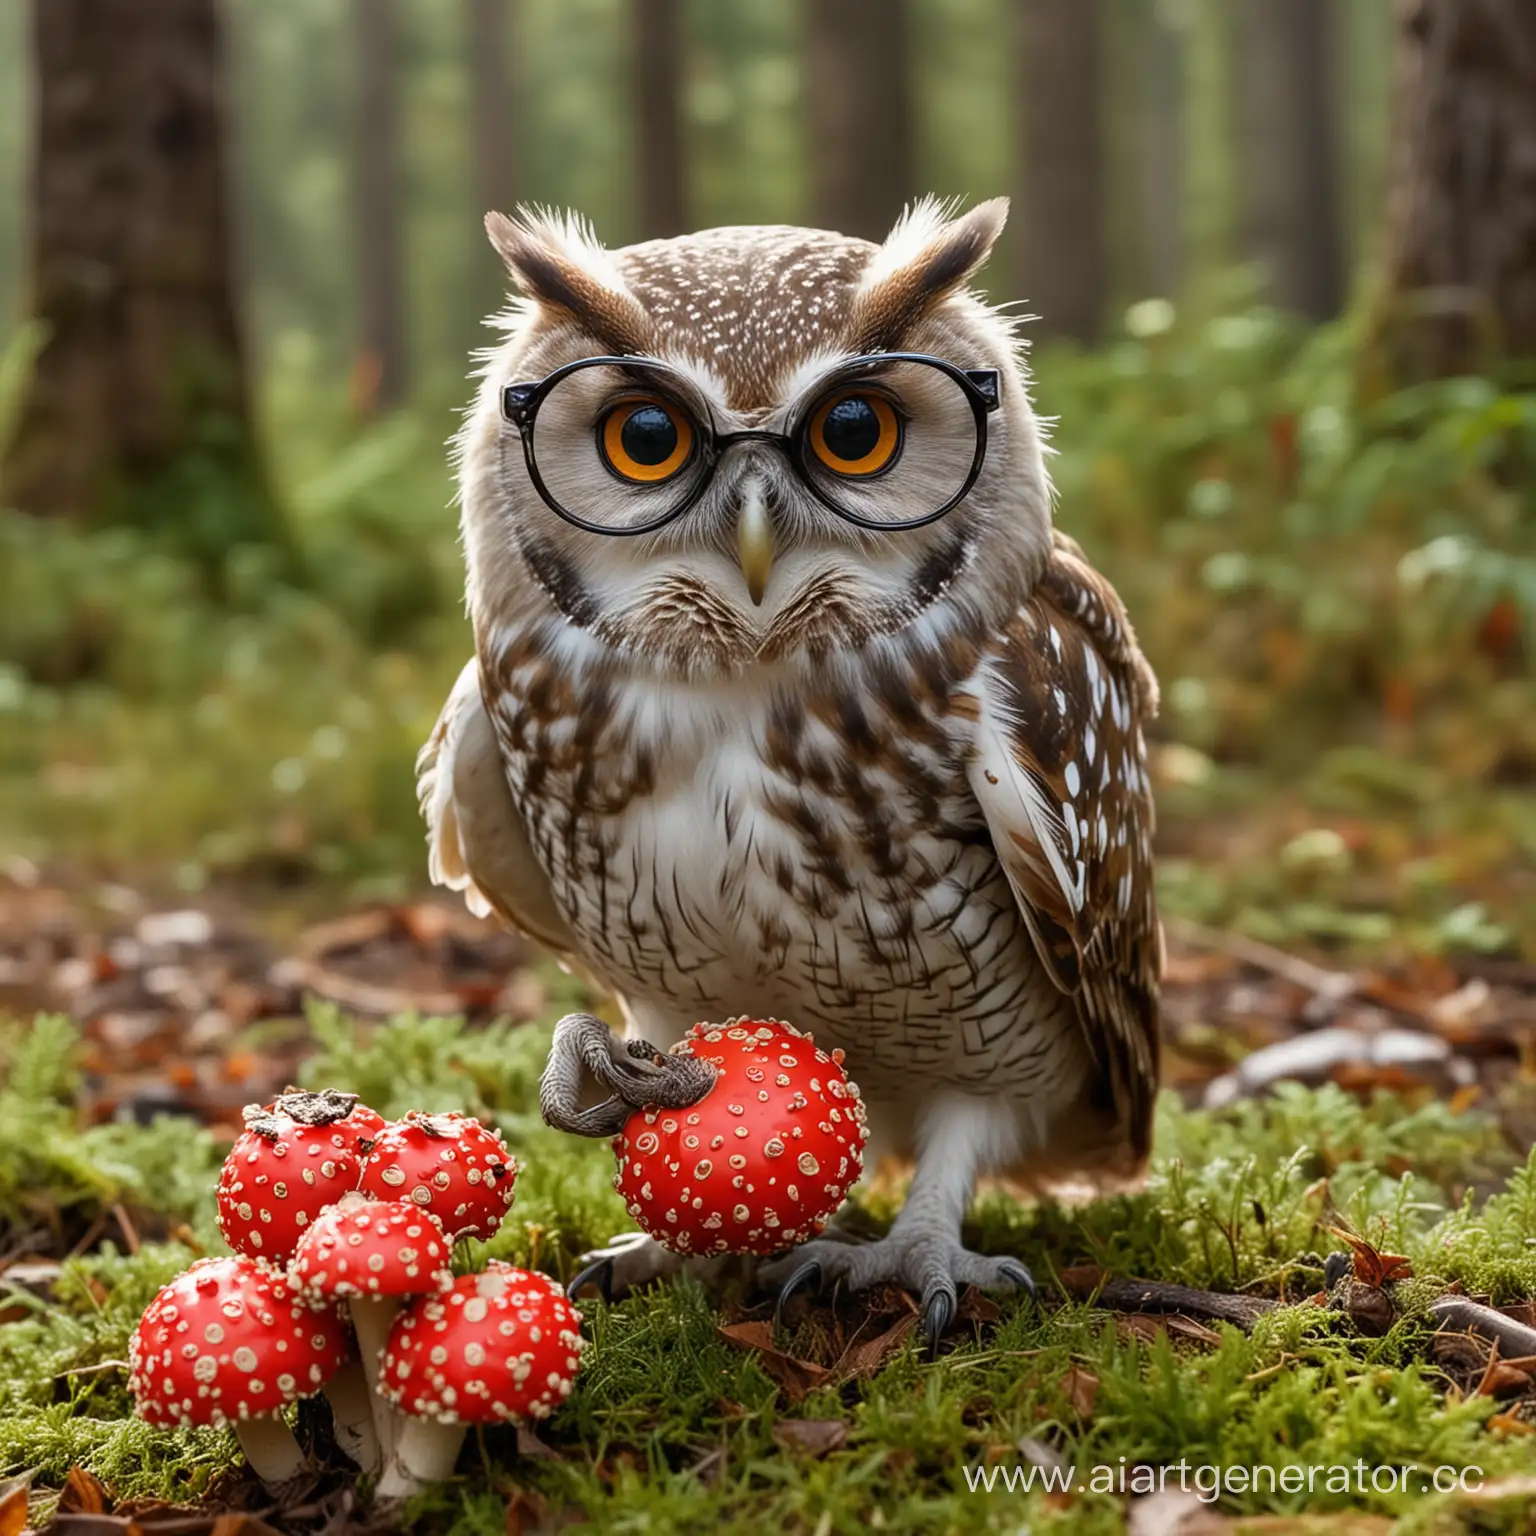 Intelligent-Owl-Enjoying-a-Meal-of-Fly-Agaric-Mushrooms